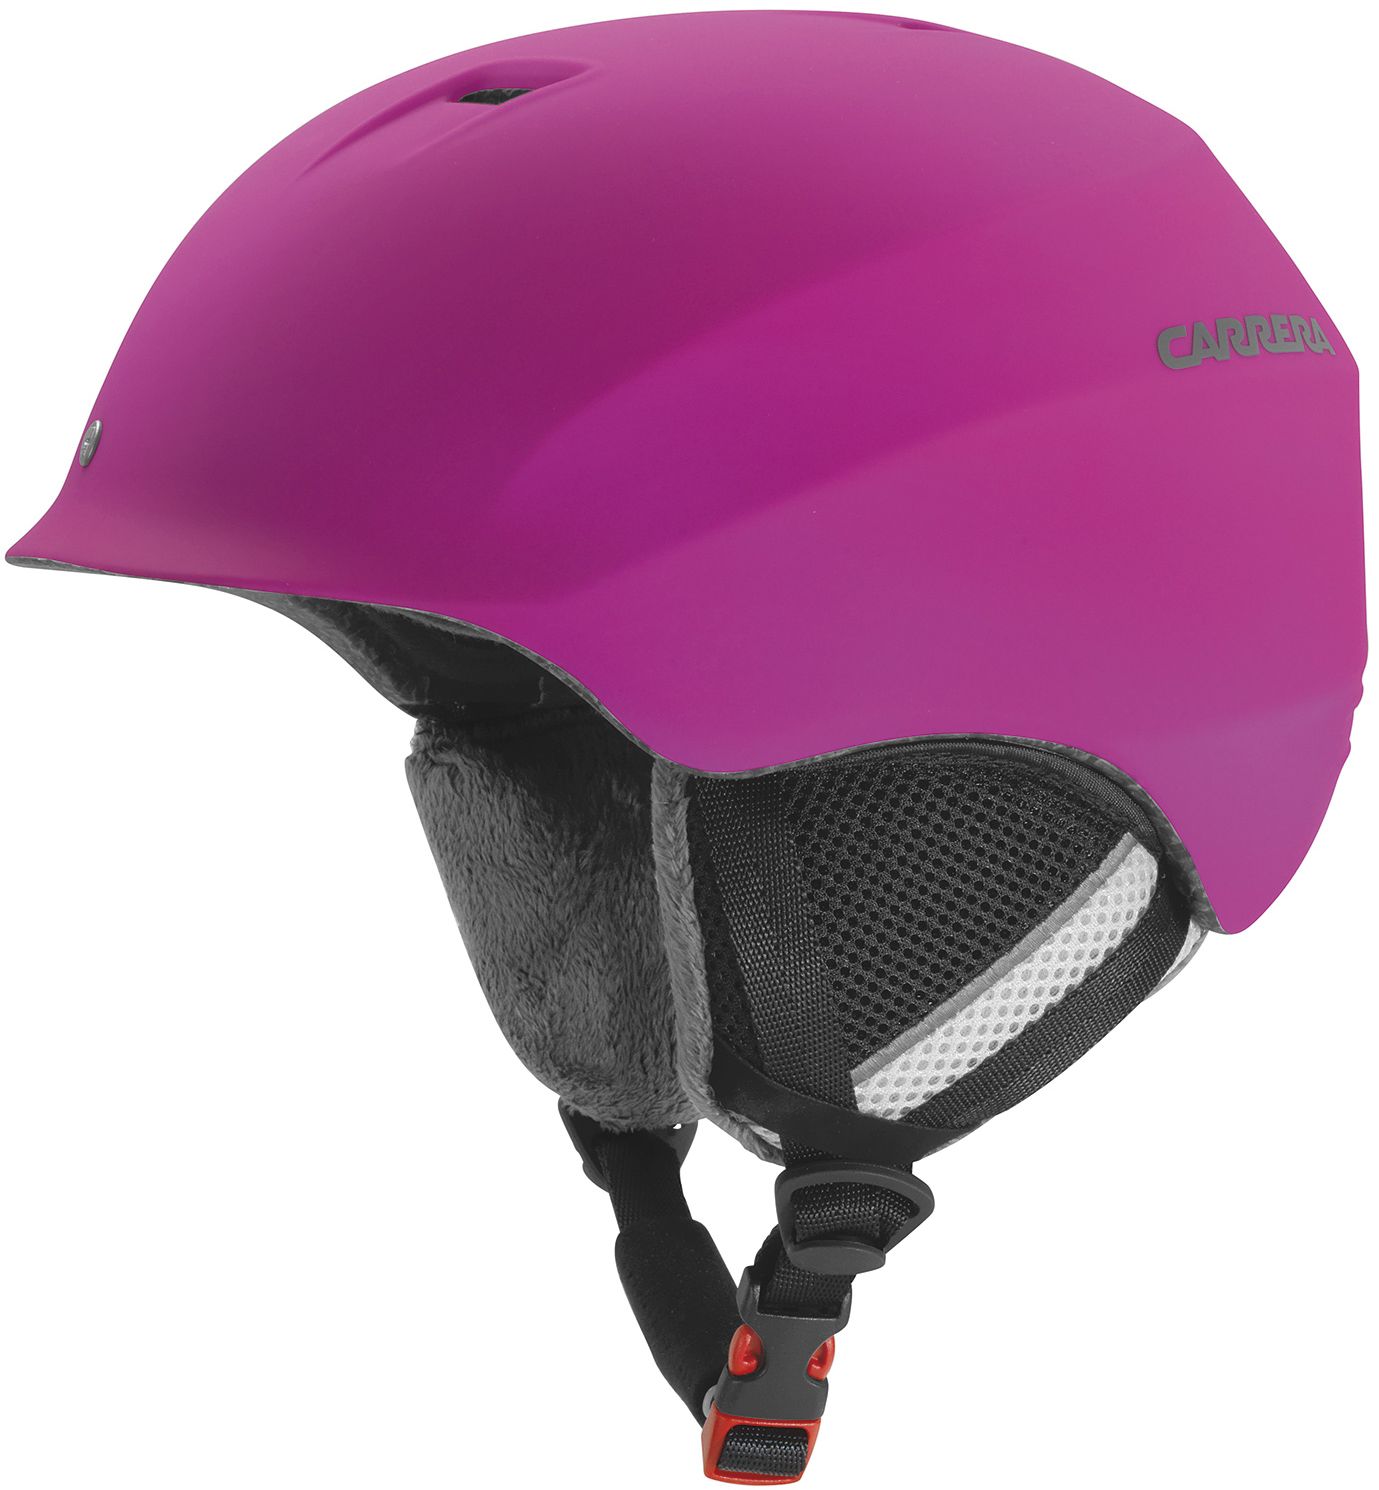 Dámska lyžiarska helma